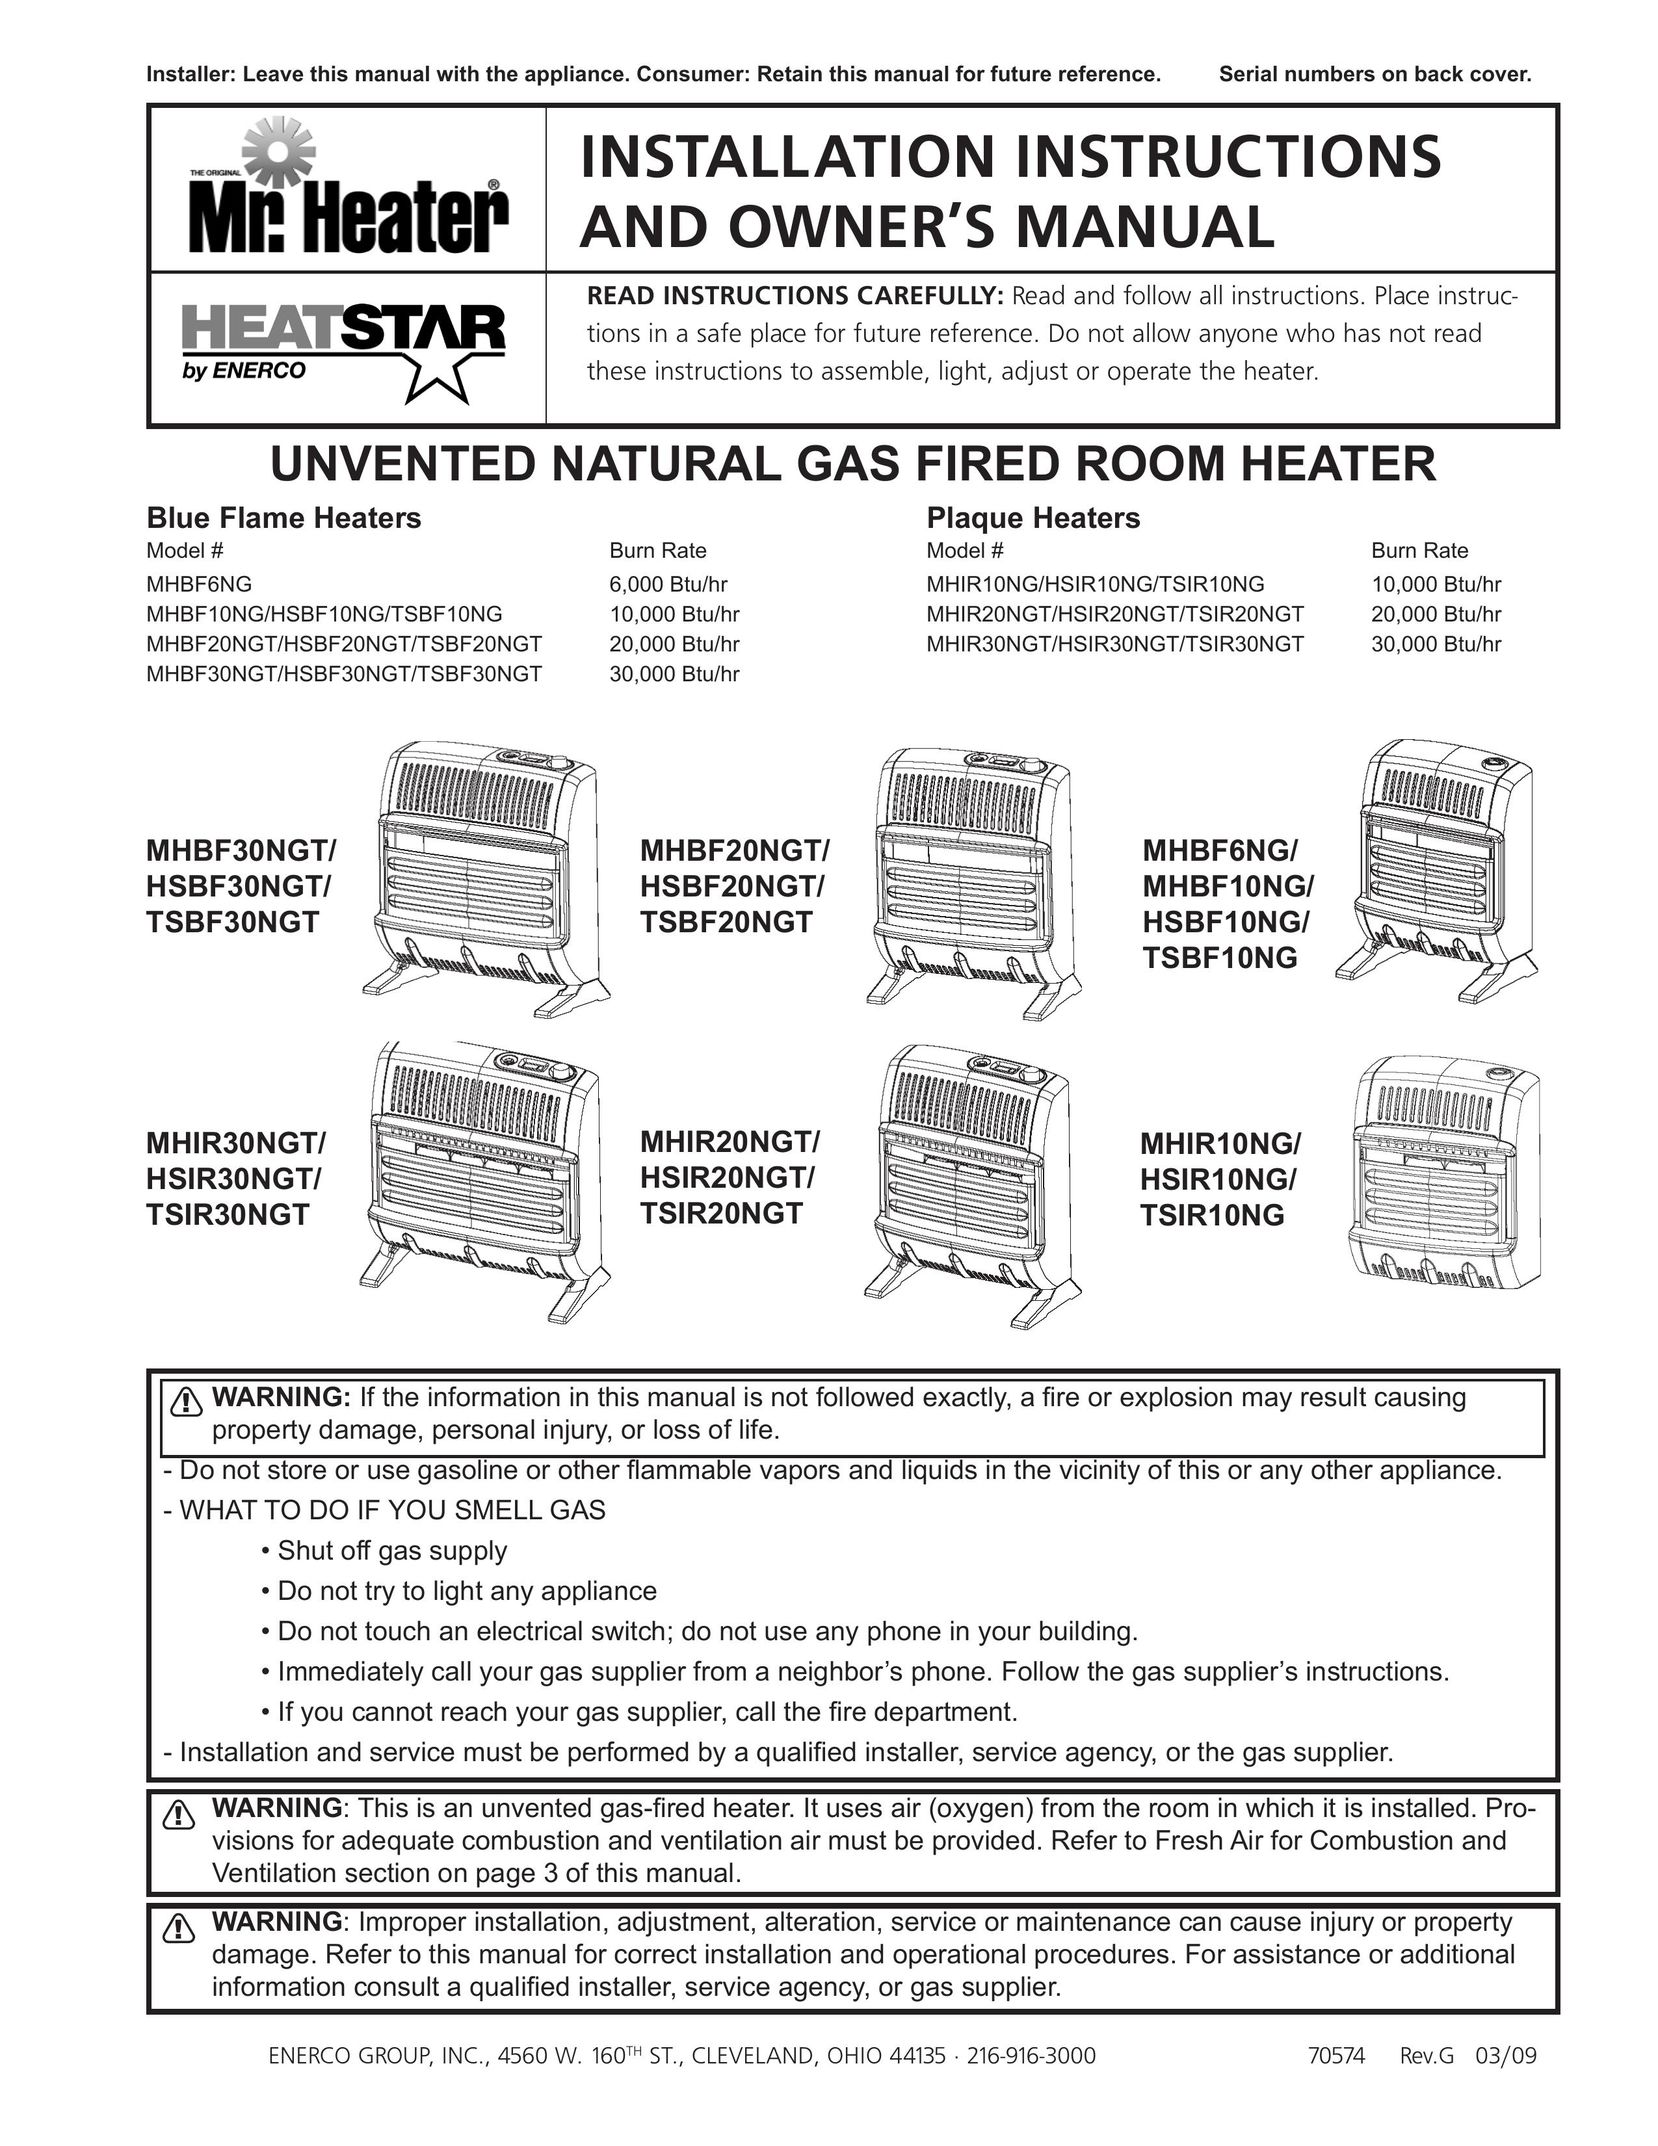 Enerco MHBF10NG Gas Heater User Manual